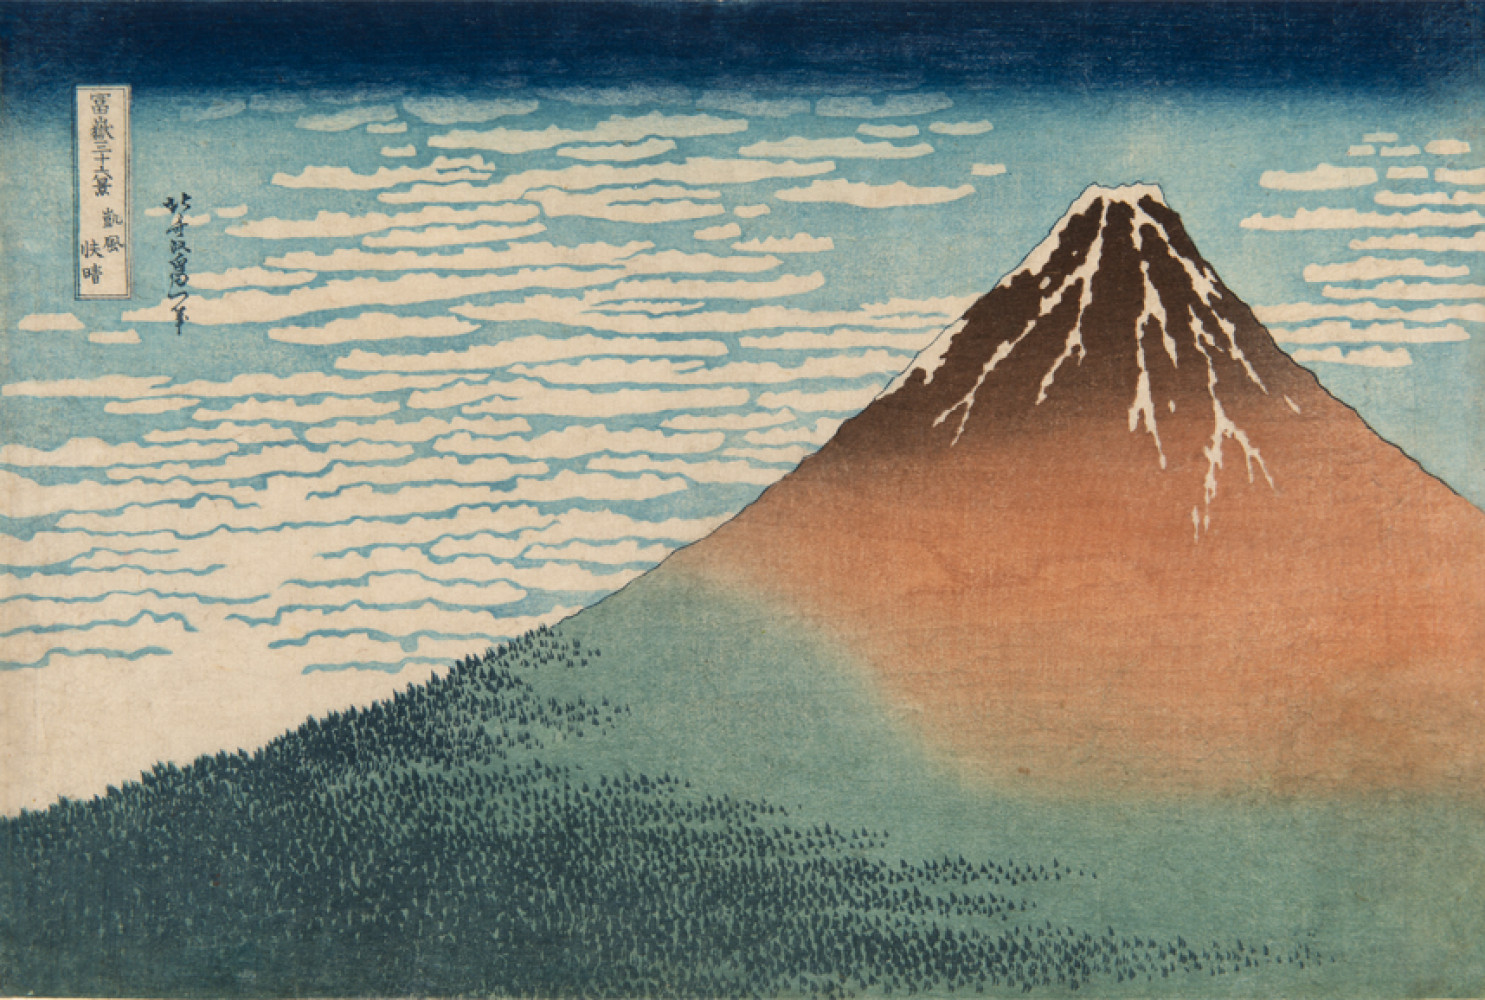 KATSUSHIKA HOKUSAI (1760—1849) 
South Wind, Clear Dawn (Red Fuji) from the series Thirty-six Views of Fuji, ca. 1831—33. Color woodblock print, 10 1/8 x 15 inches. 